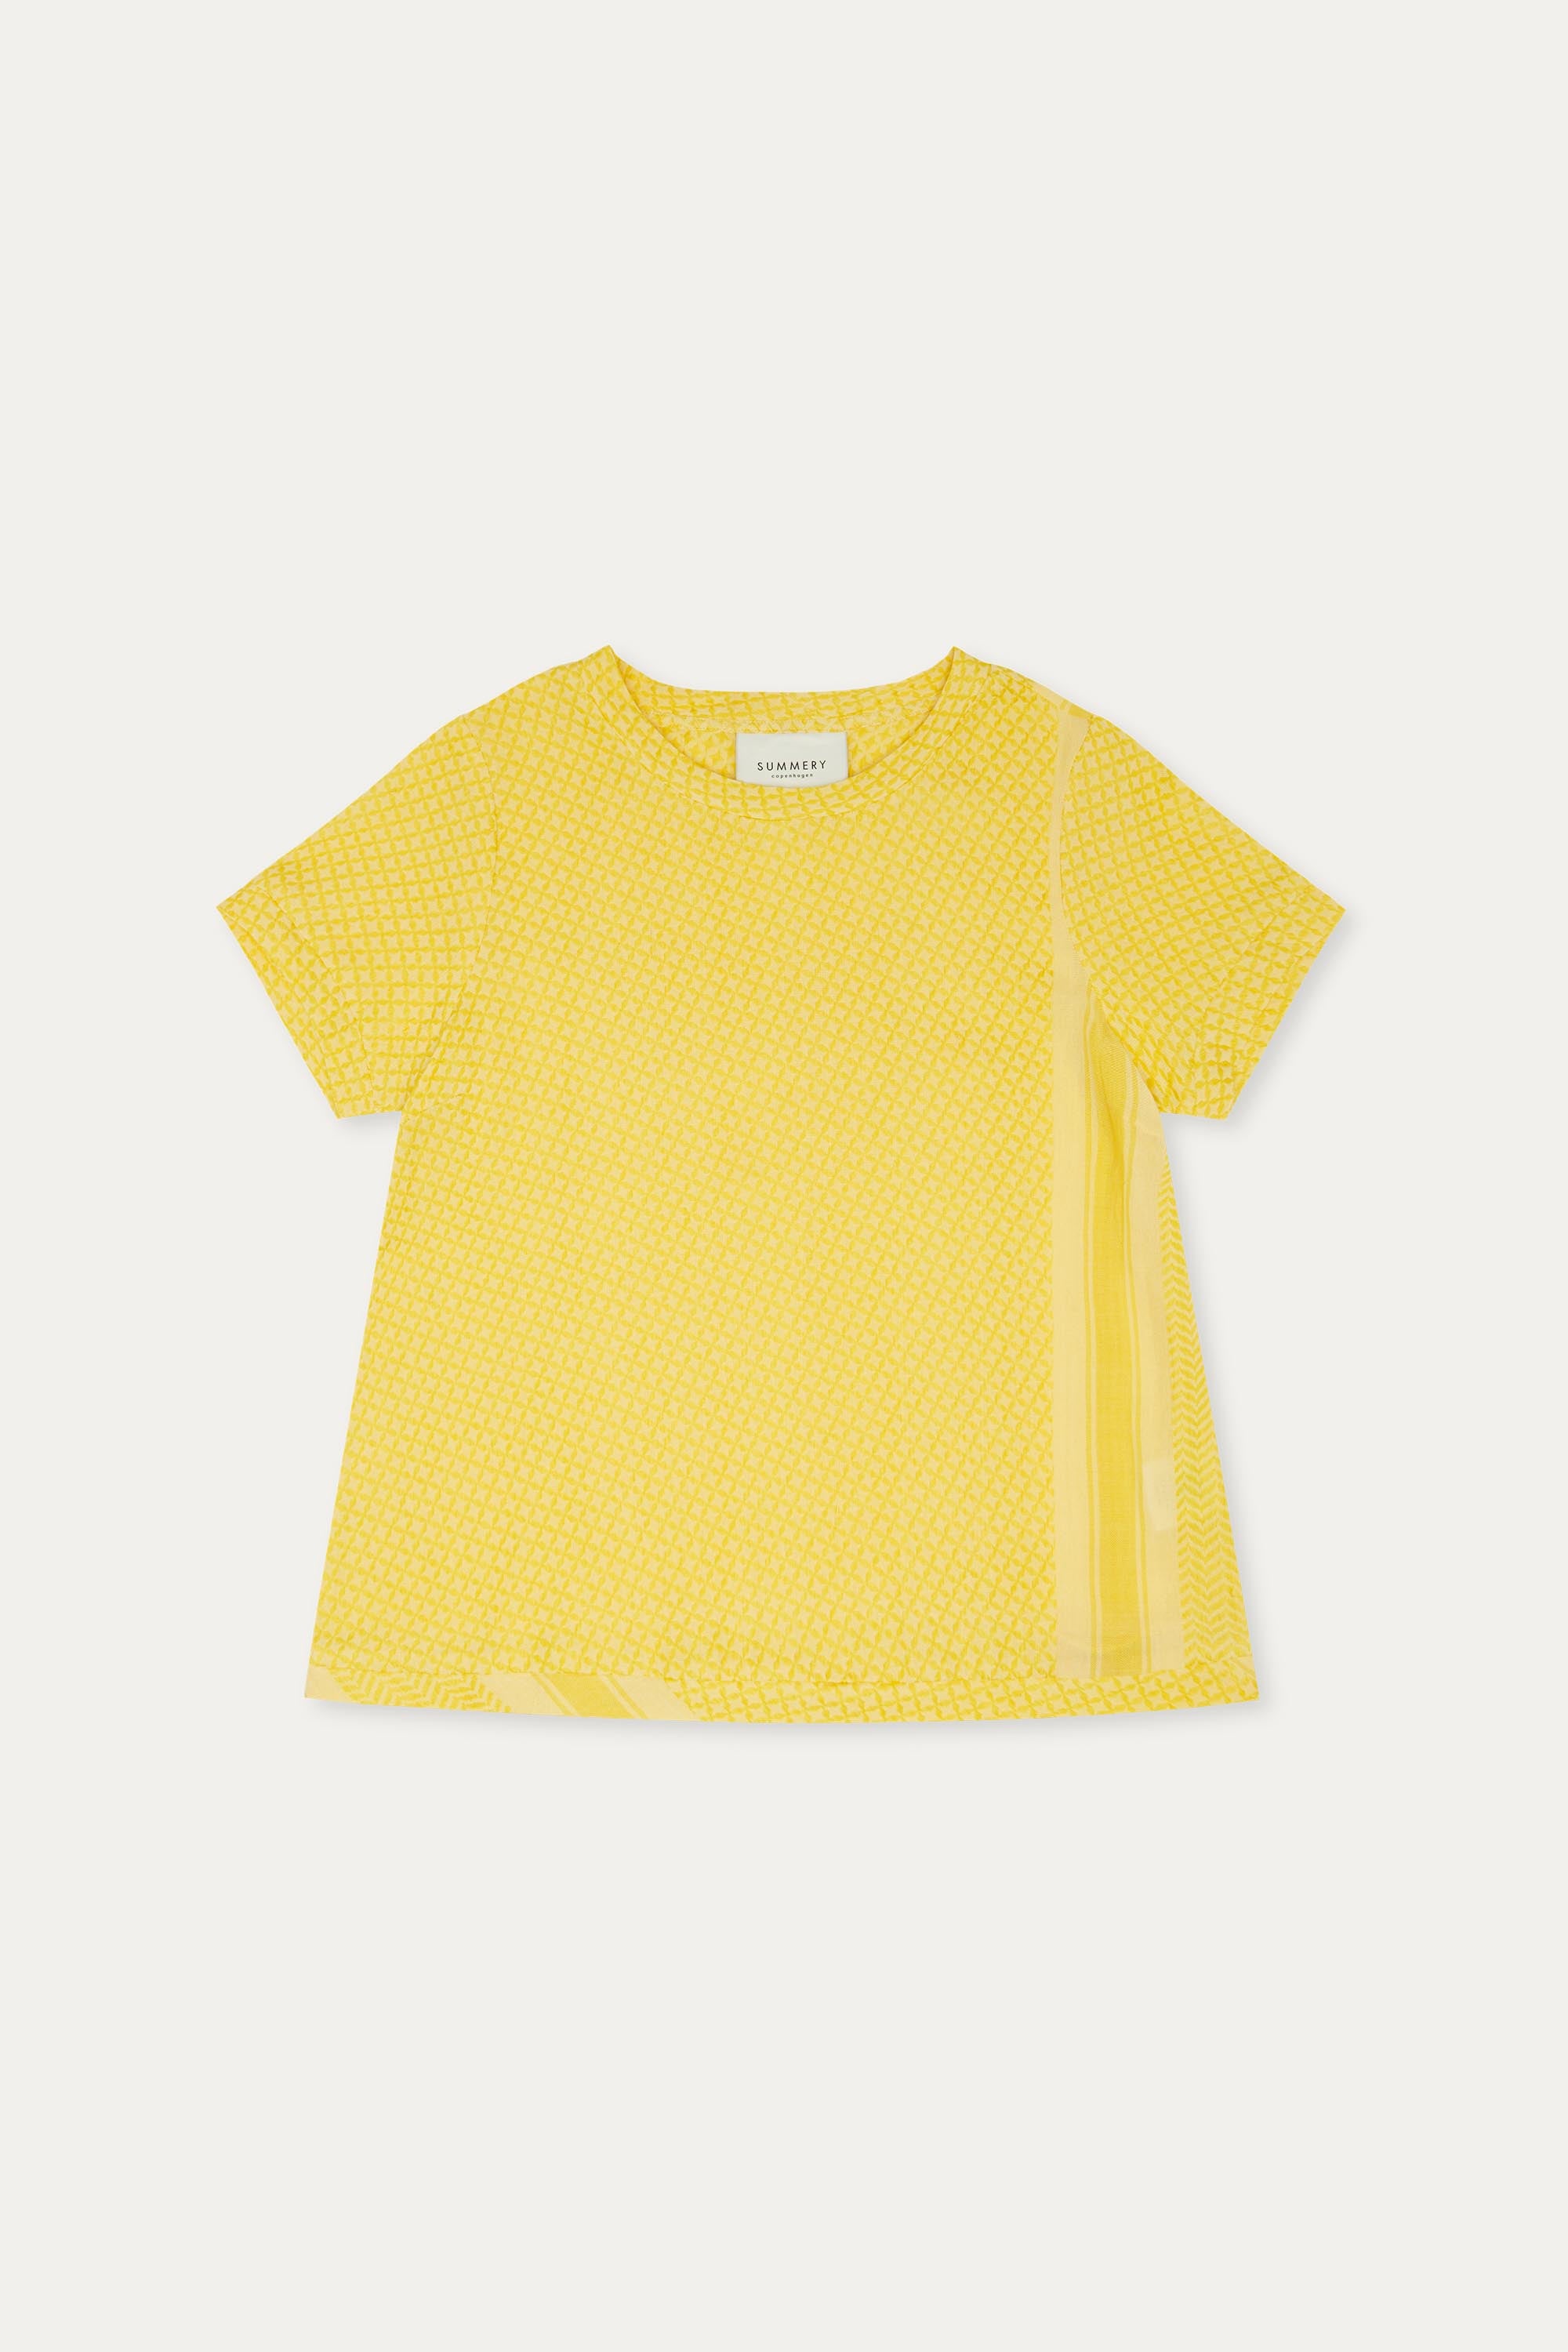 SUMMERY Copenhagen Shirt O Short Sleeves Top 579 Vibrant Yellow